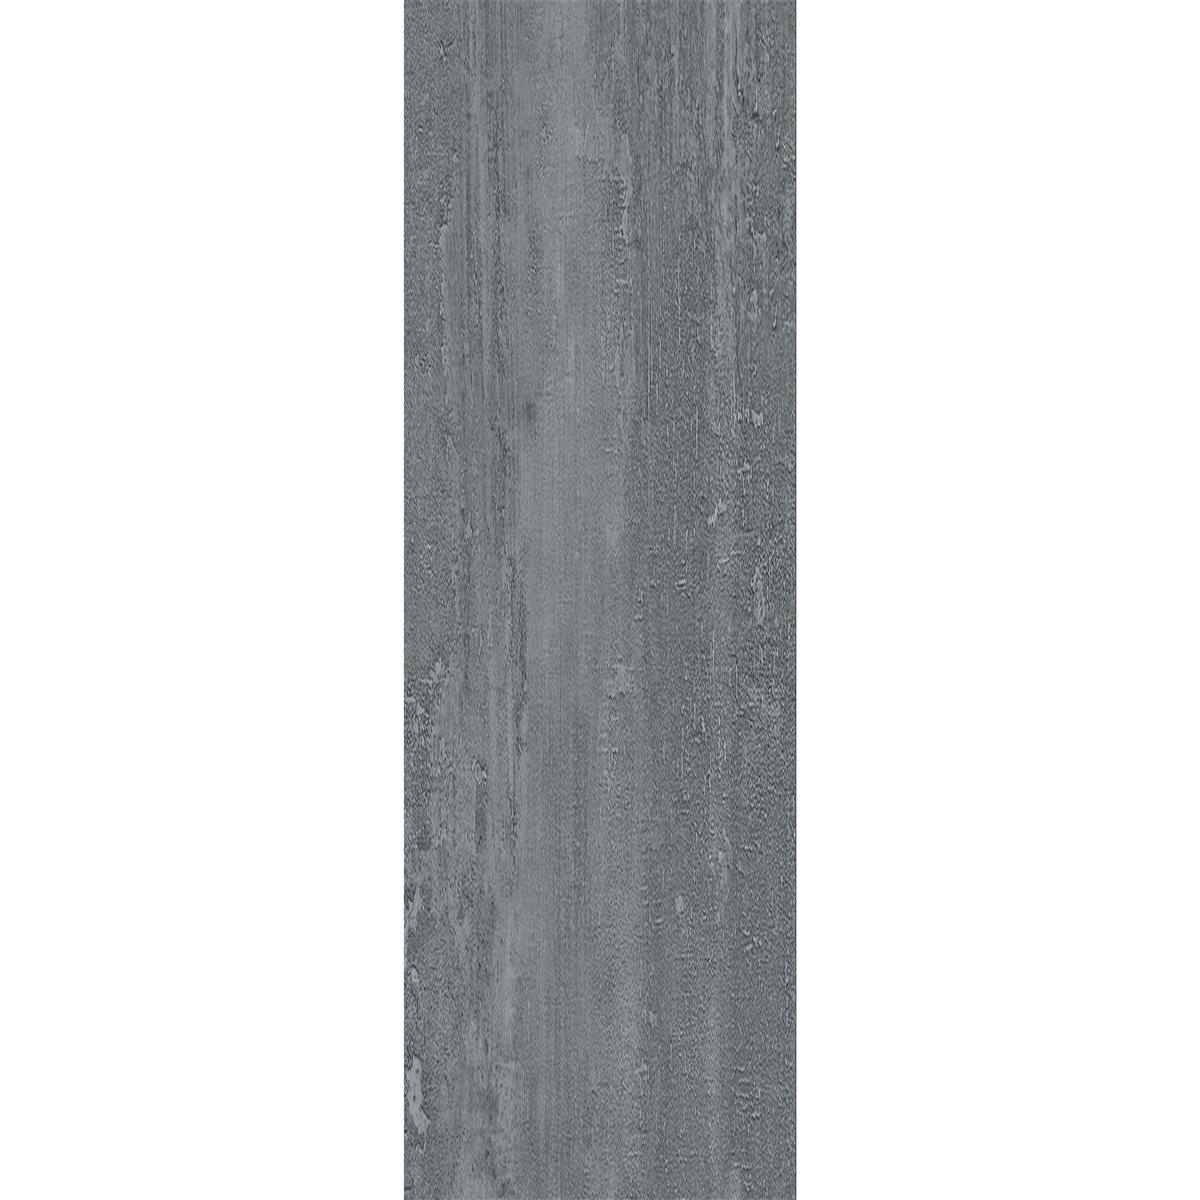 Suelo De Vinilo Sistema De Clic Gandia Gris Claro 17,2x121cm